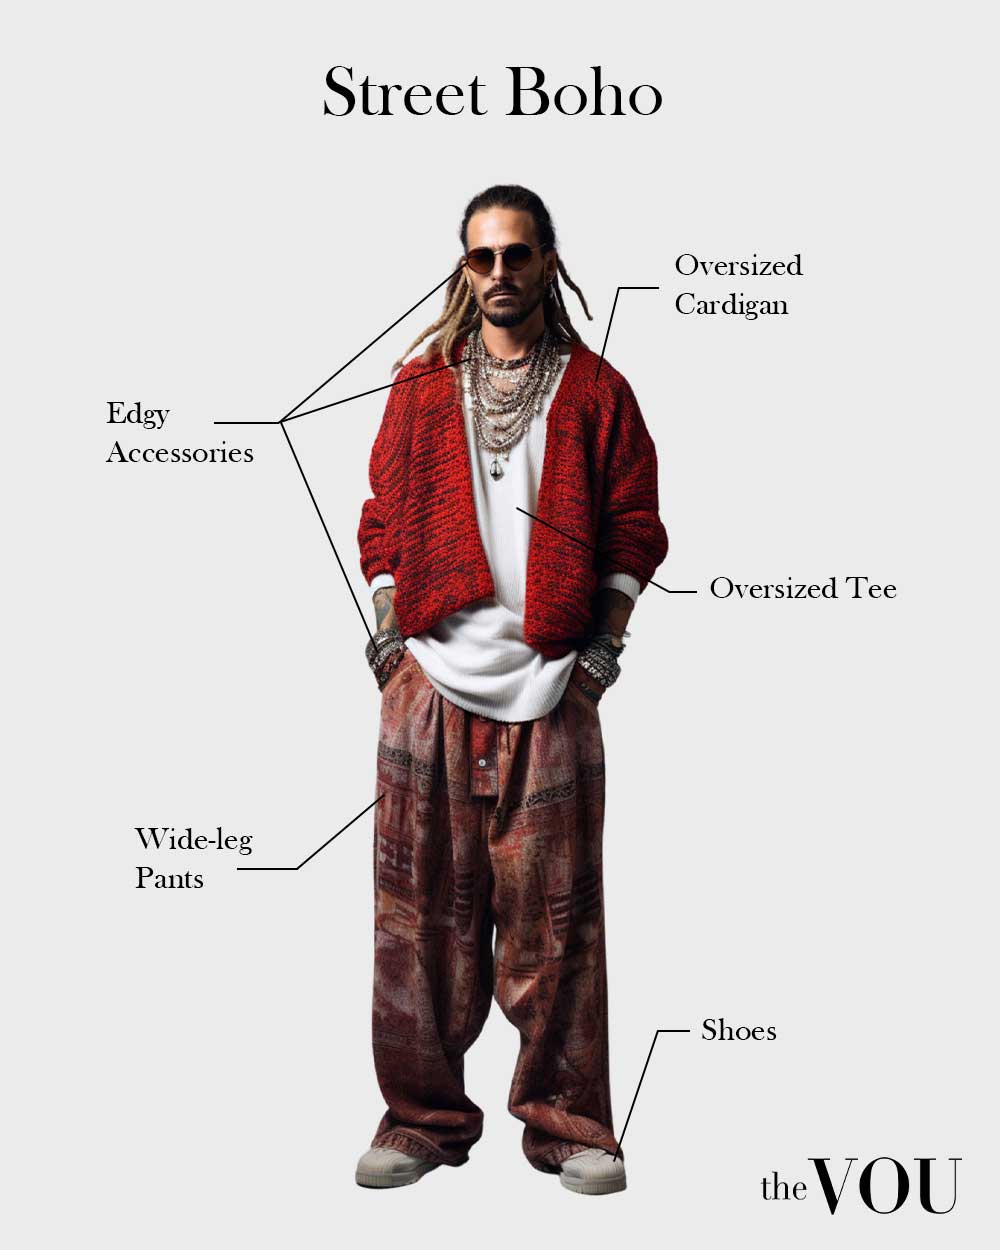 street boho outfit for men